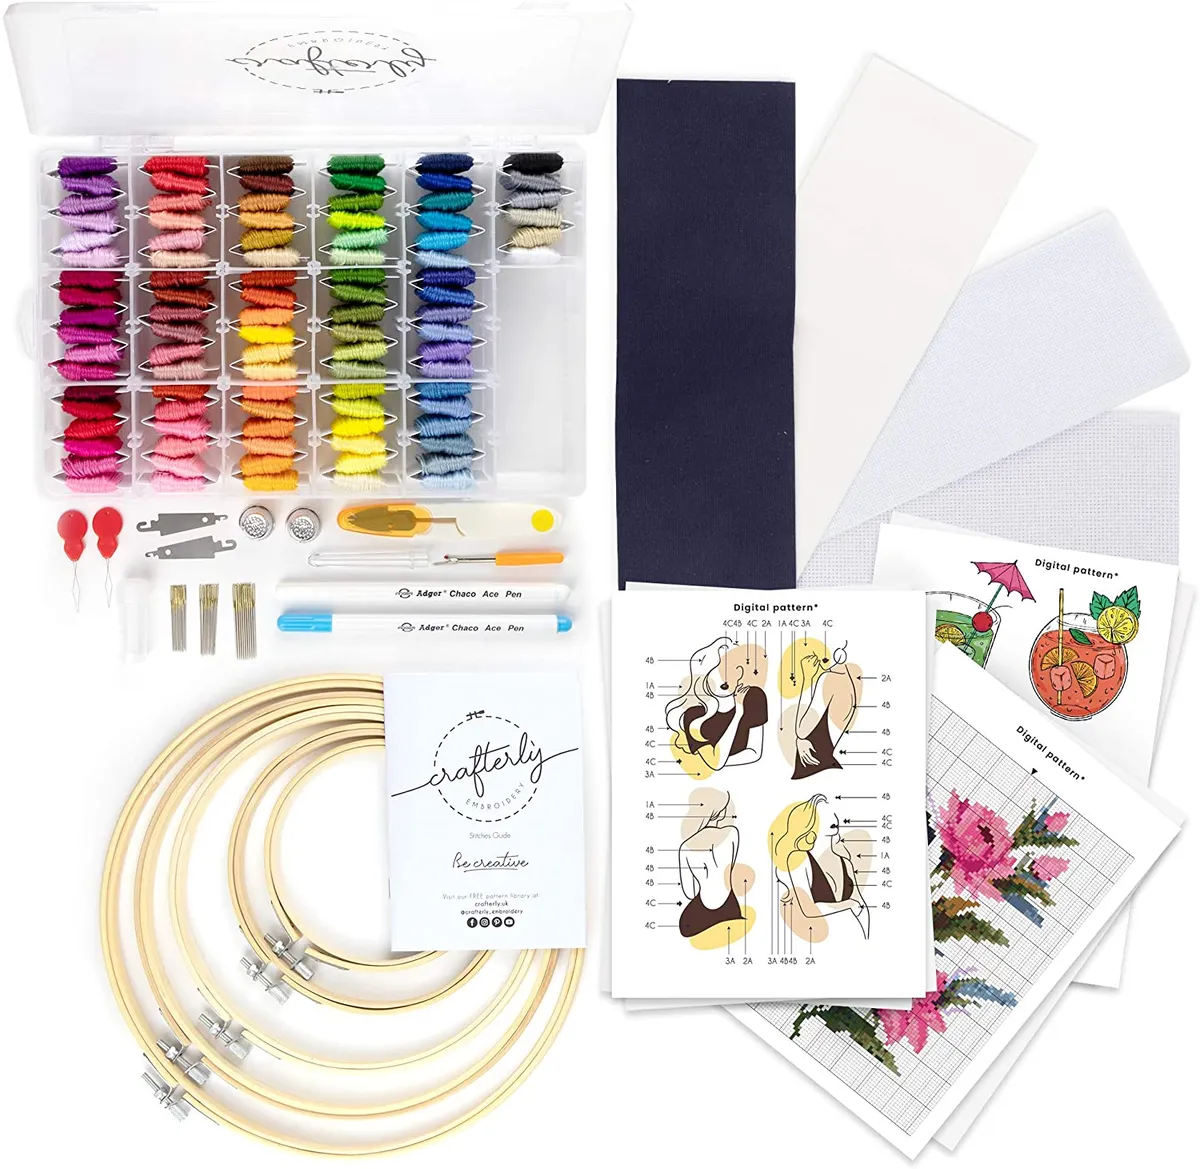 Embroidery starter kit for beginners